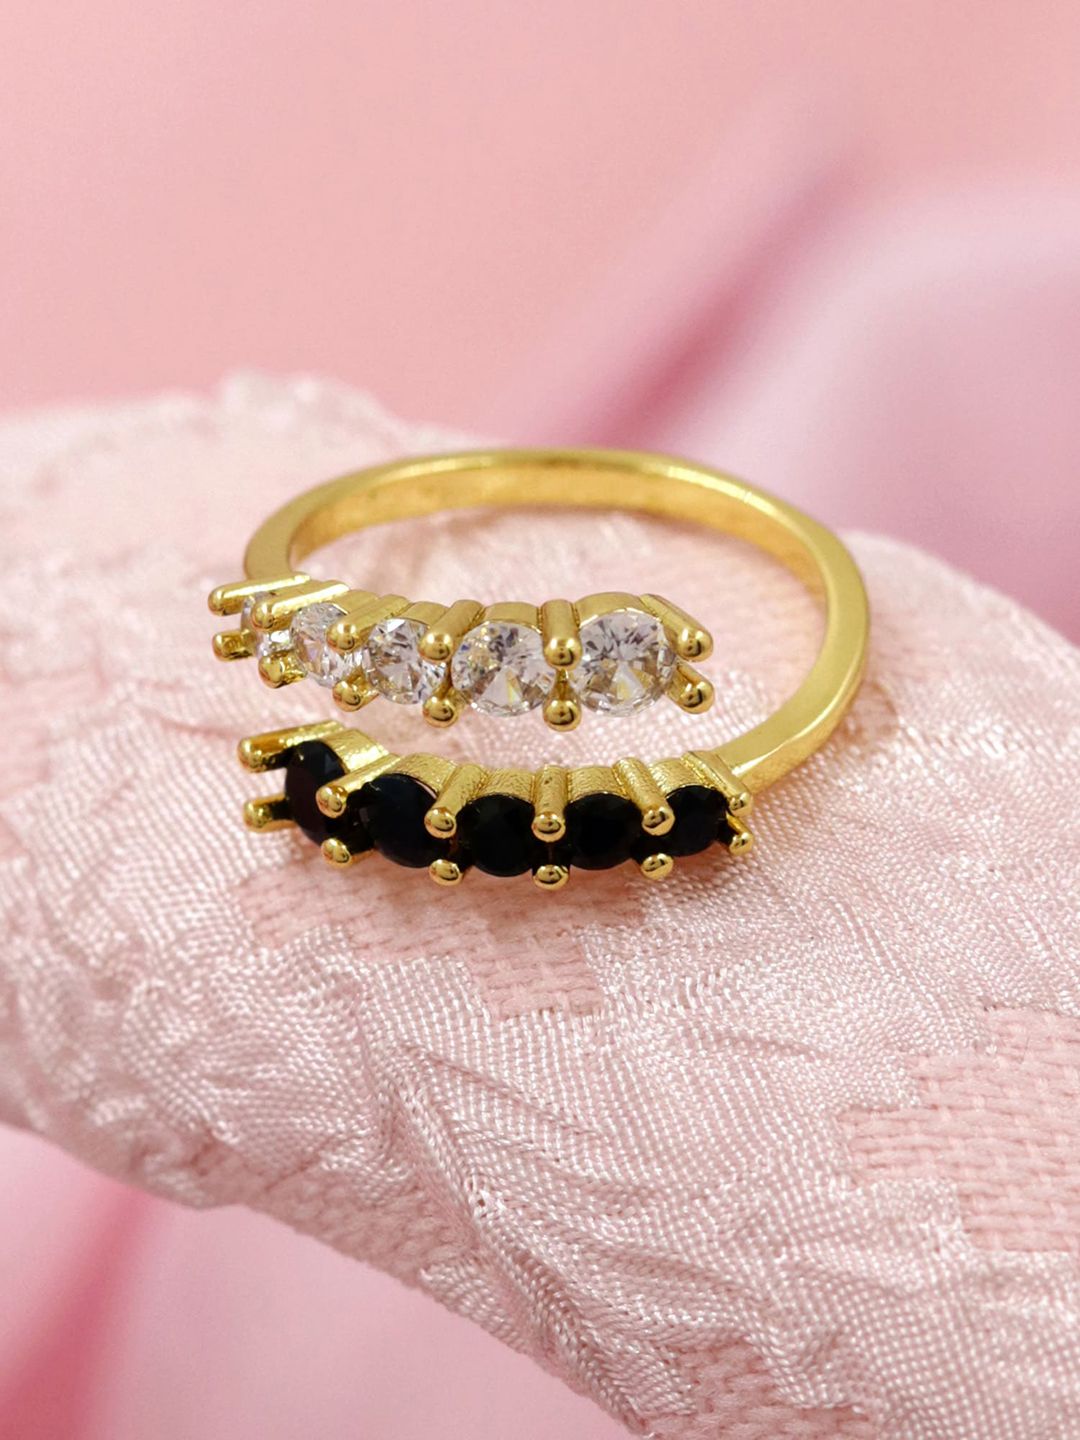 Bellofox Gold-Plated White & Black Stone Studded Adjustable Finger Ring Price in India